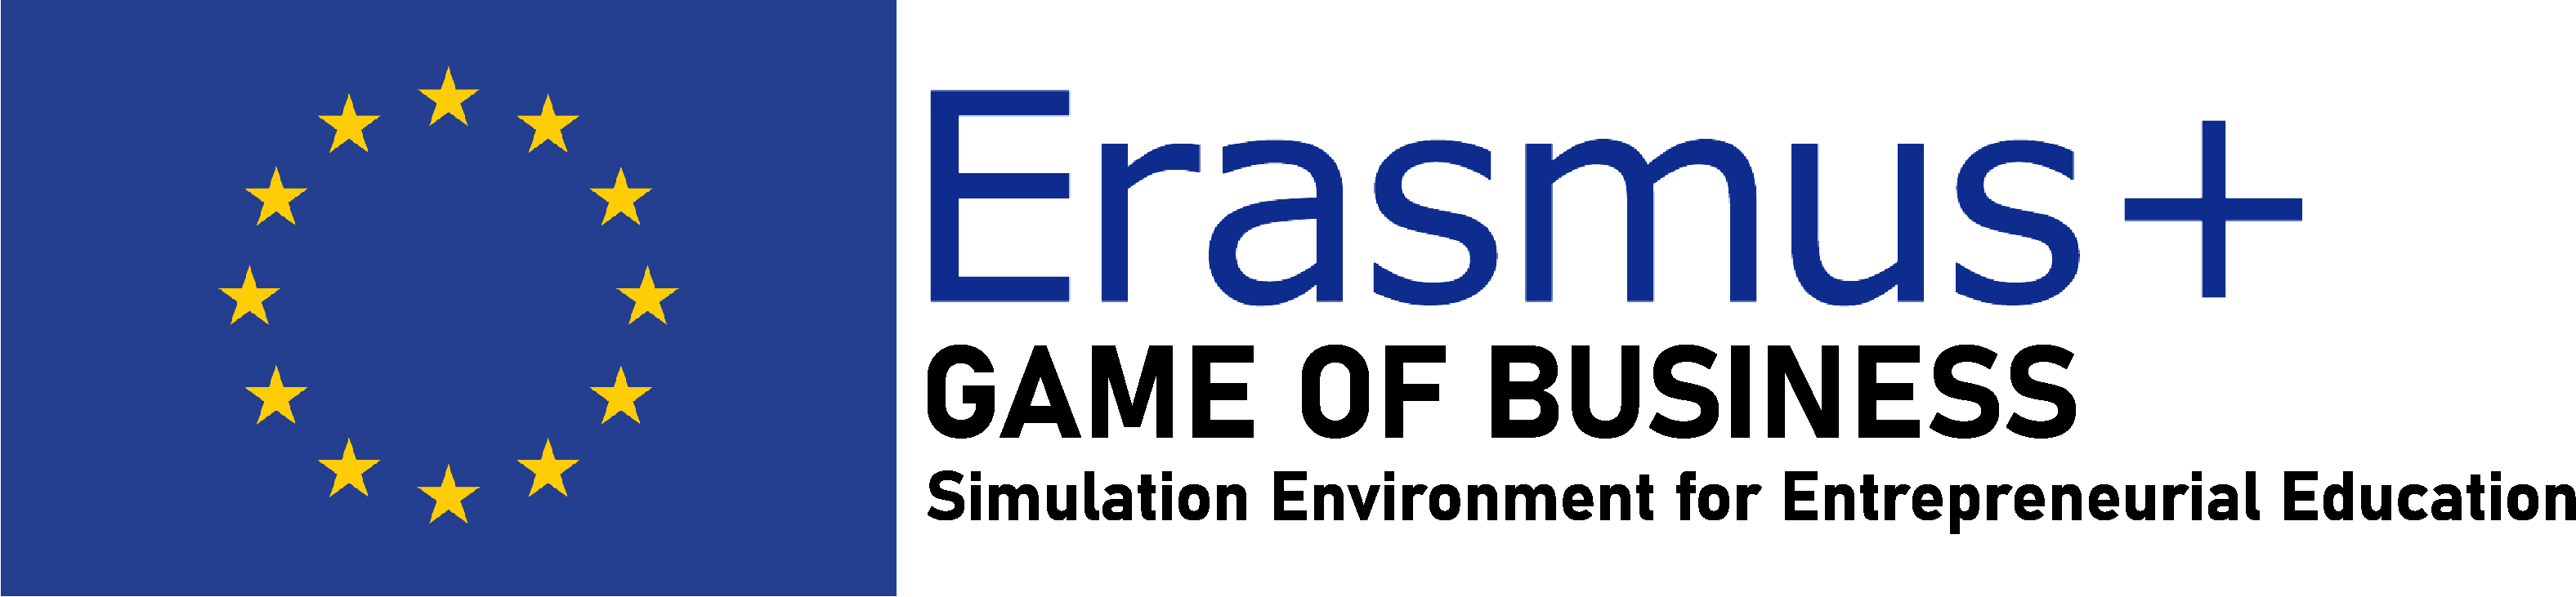 Erasmus+_GameOfBusiness_logo.png